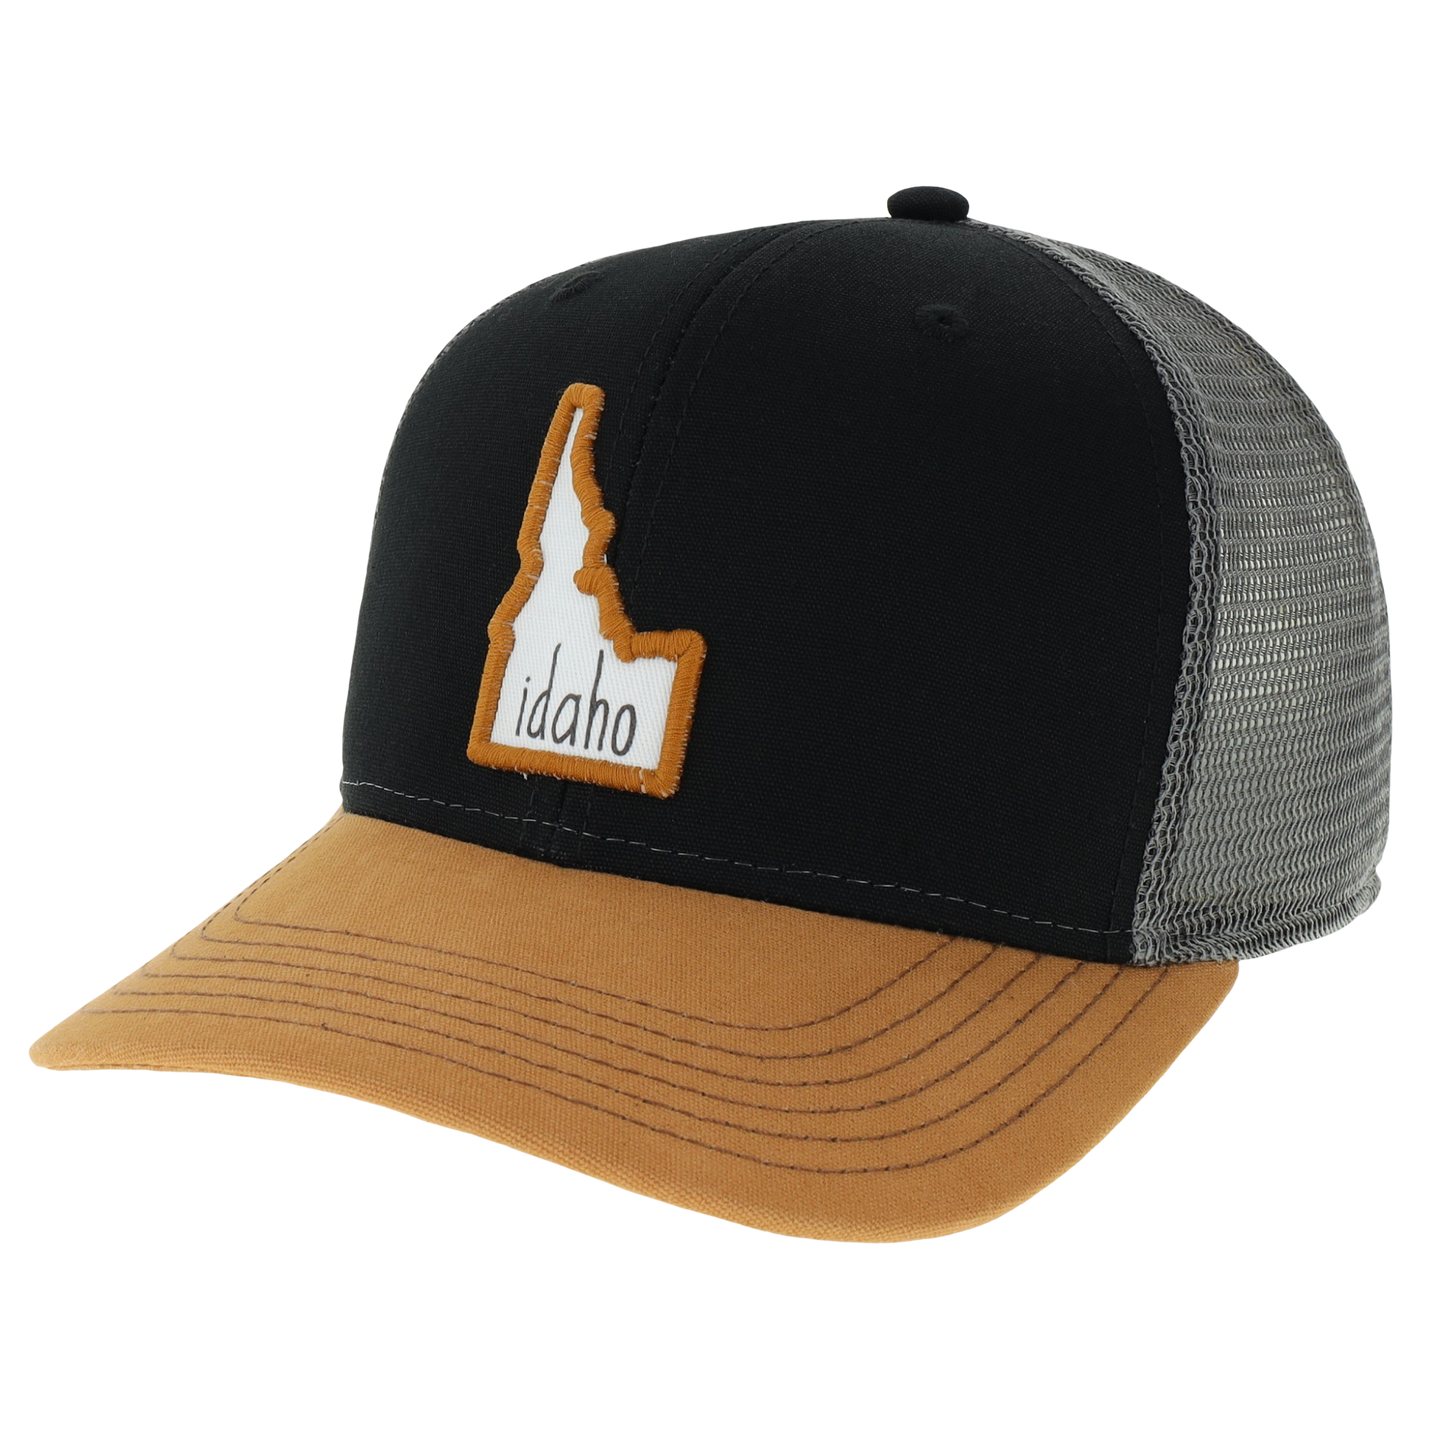 Idaho Mid-Pro Trucker Hat in Black/Caramel/Dark Grey